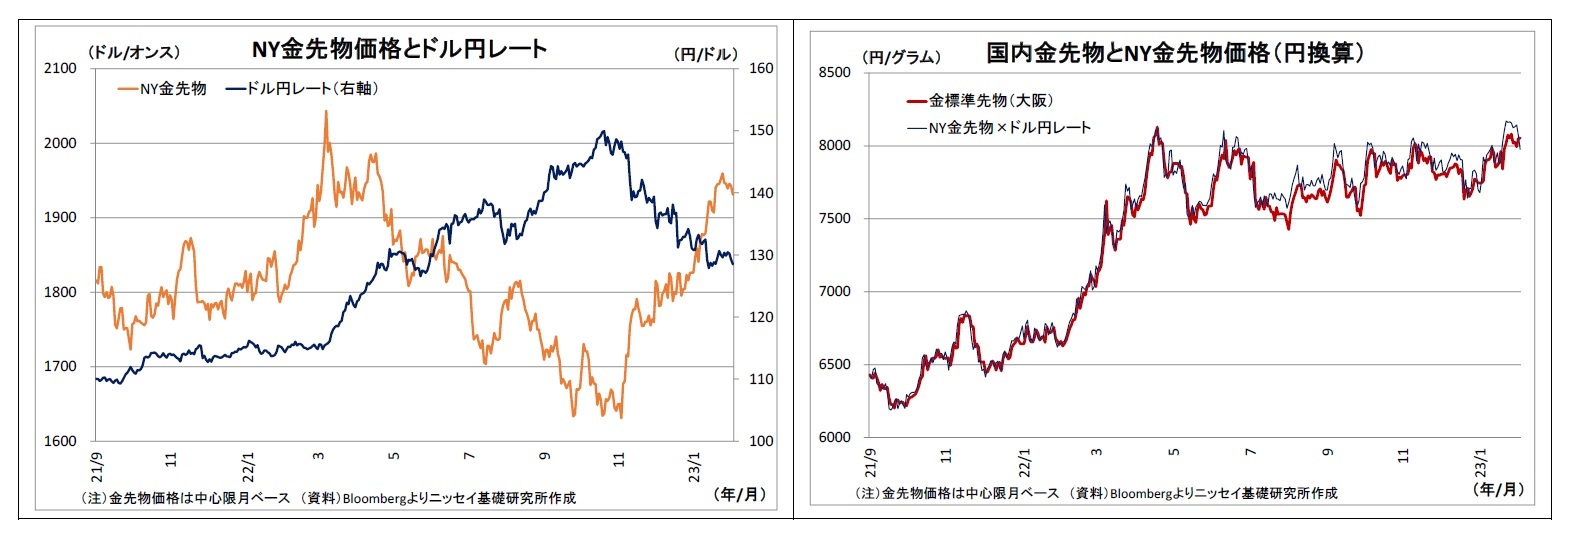 NY金先物価格とドル円レート/国内金先物とNY金先物価格（円換算）